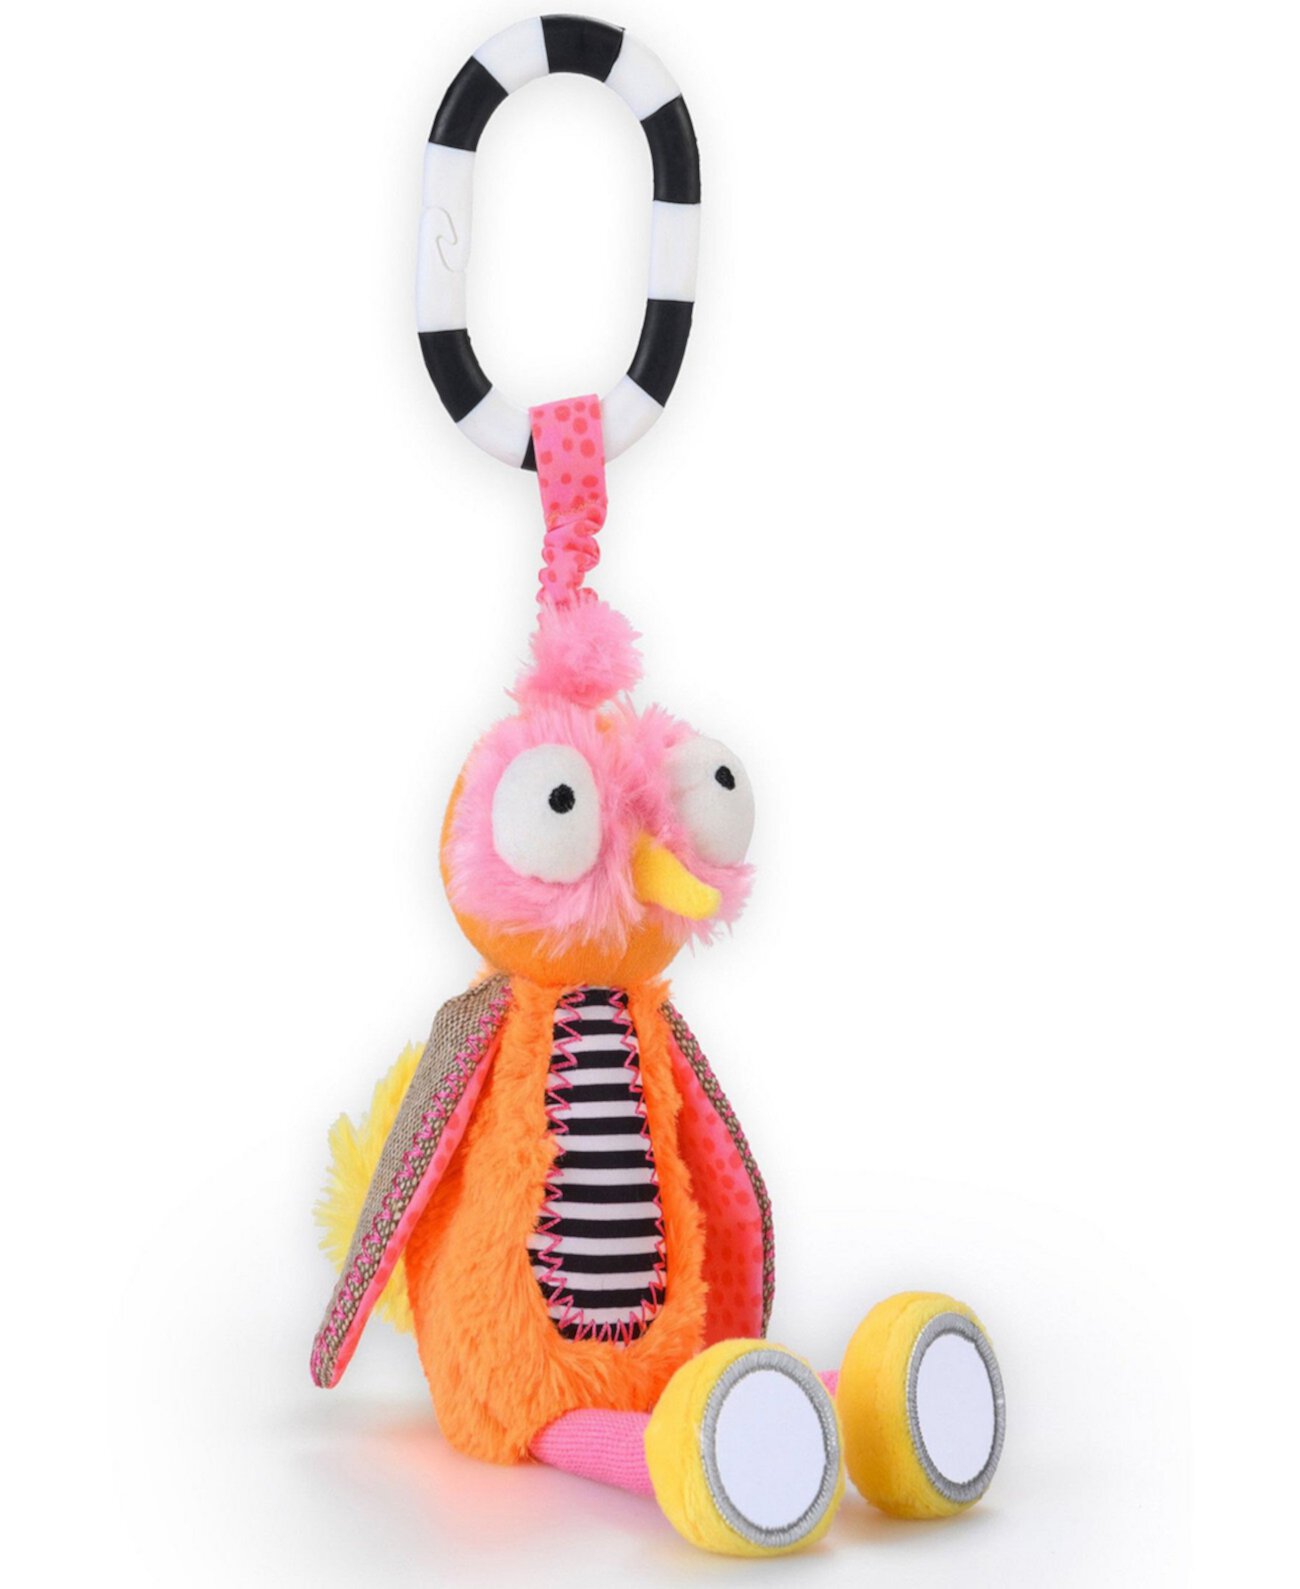 Подвесная игрушка-чудак Олли Oddbird Inklings Baby